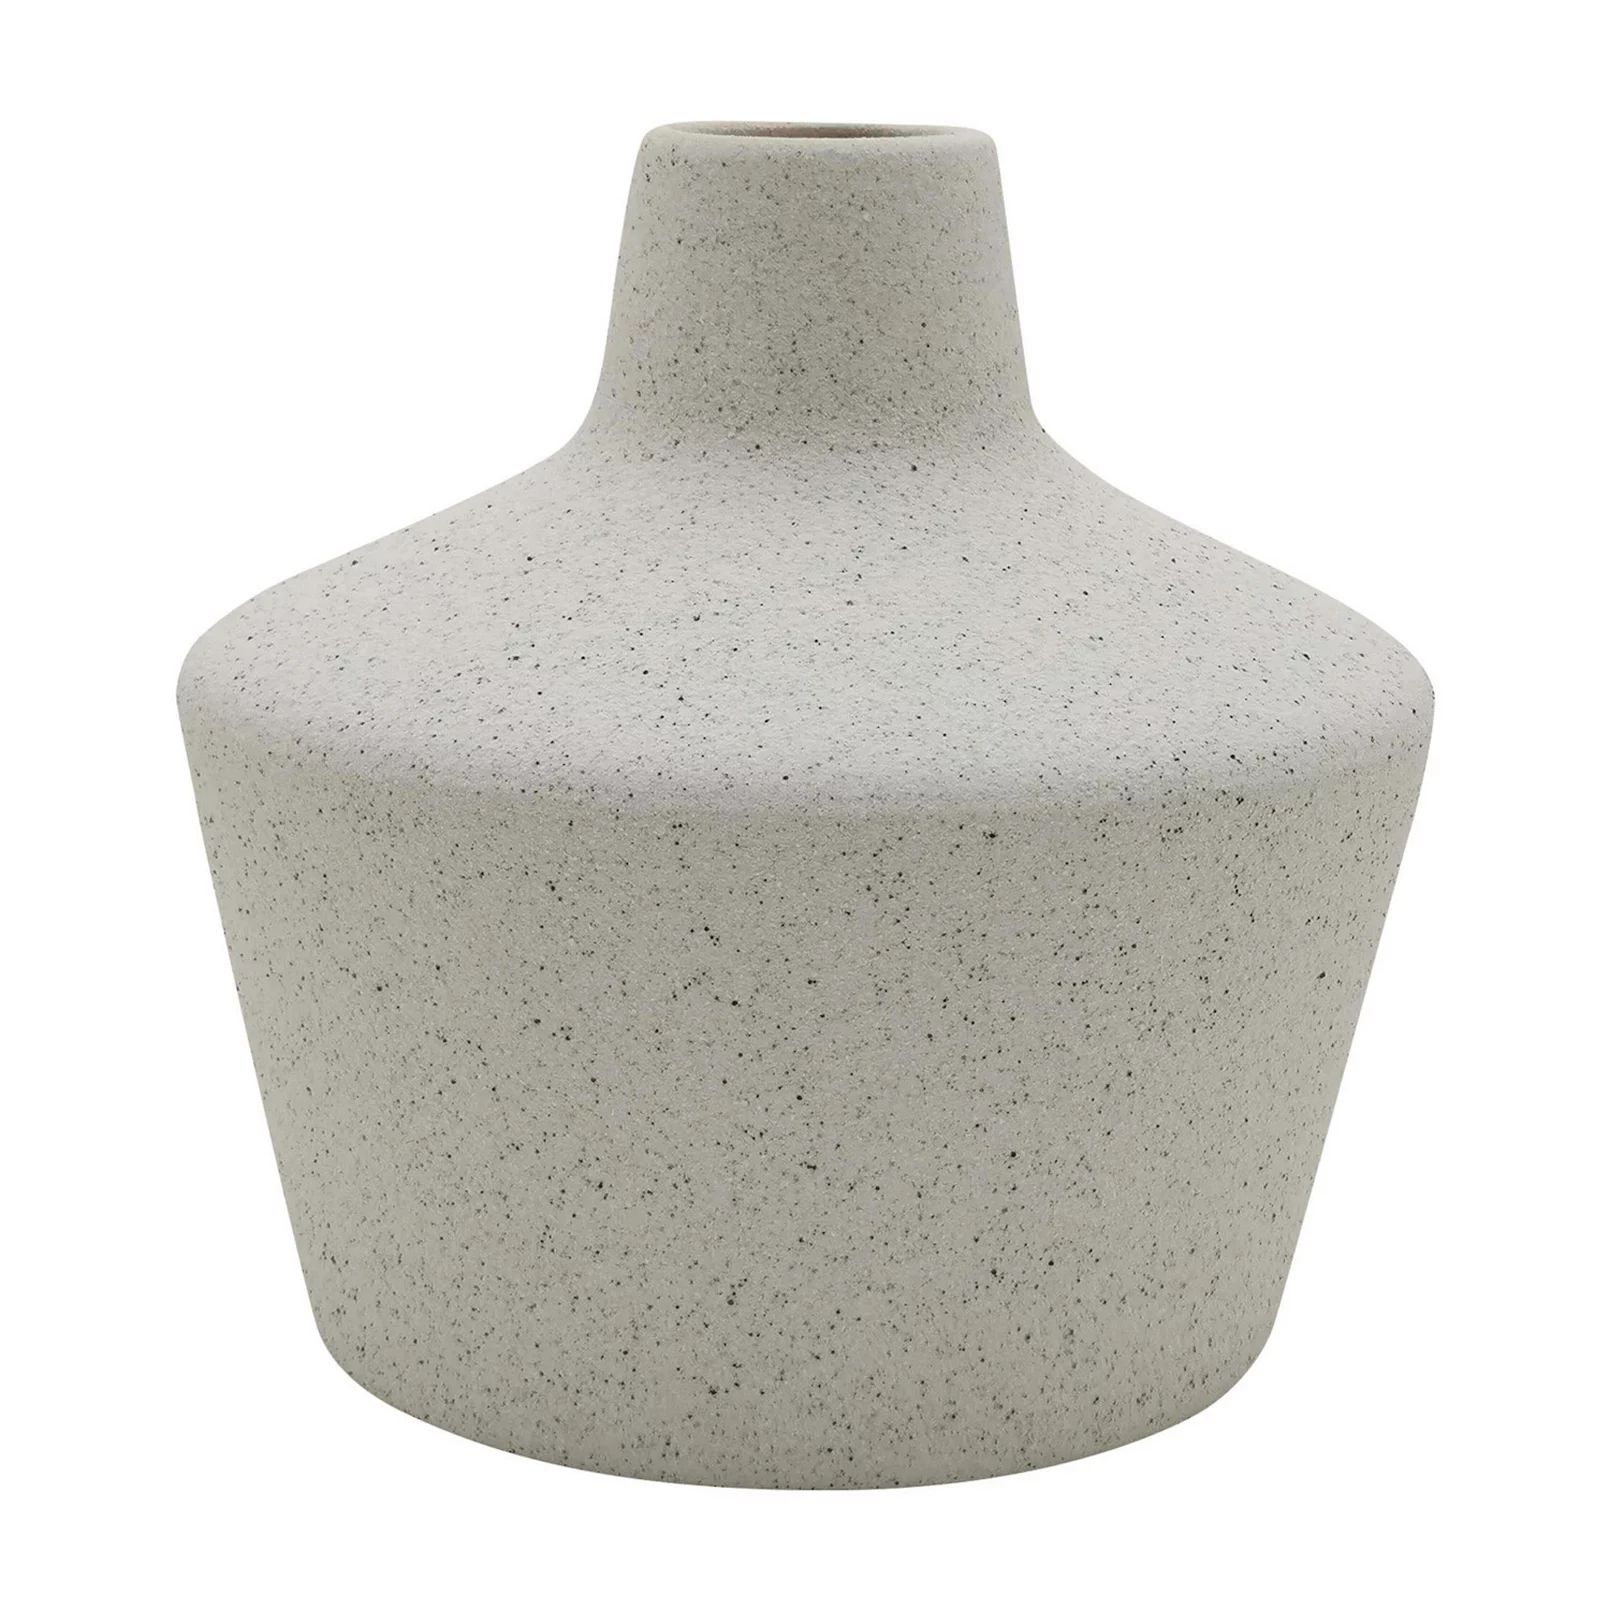 Sonoma Goods For Life® Small Neutral Speckled Vase Table Decor | Kohl's